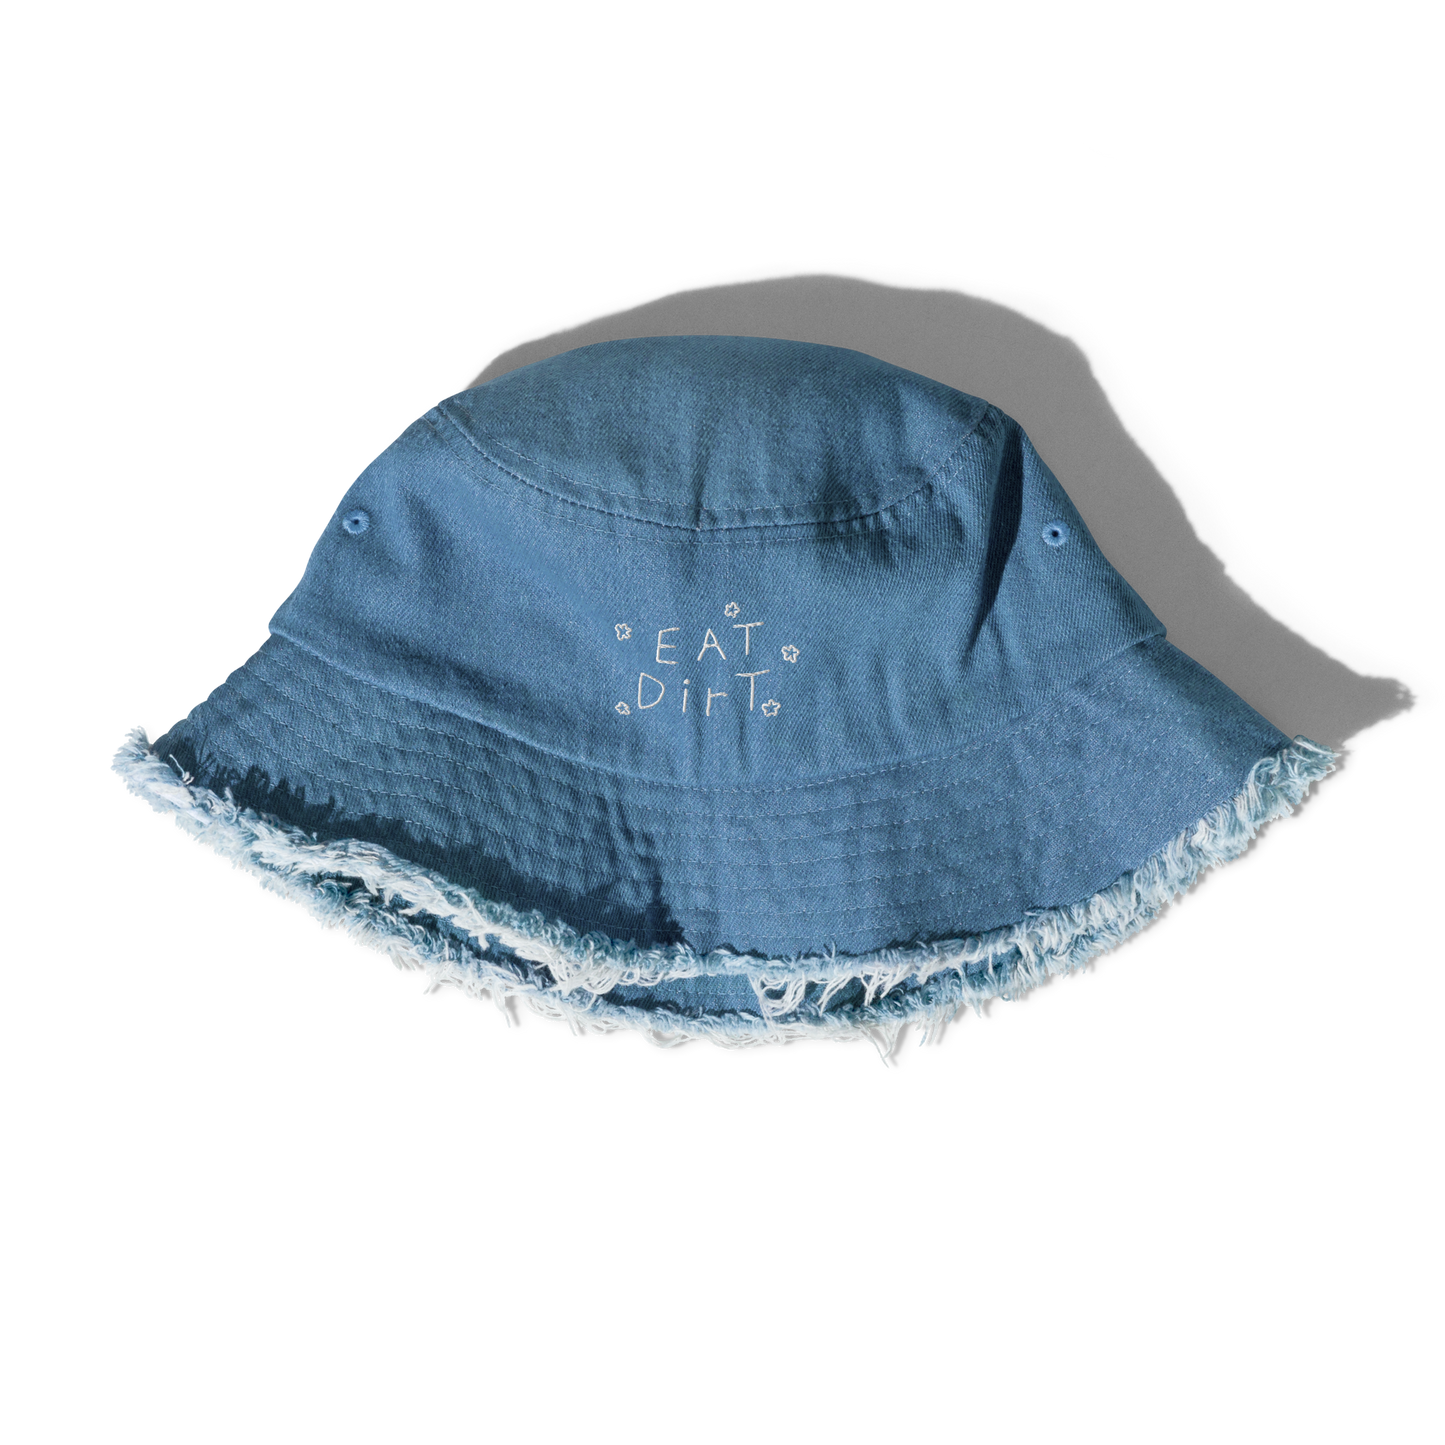 Limited Edition Light Blue Denim Eat Dirt Bucket Hat